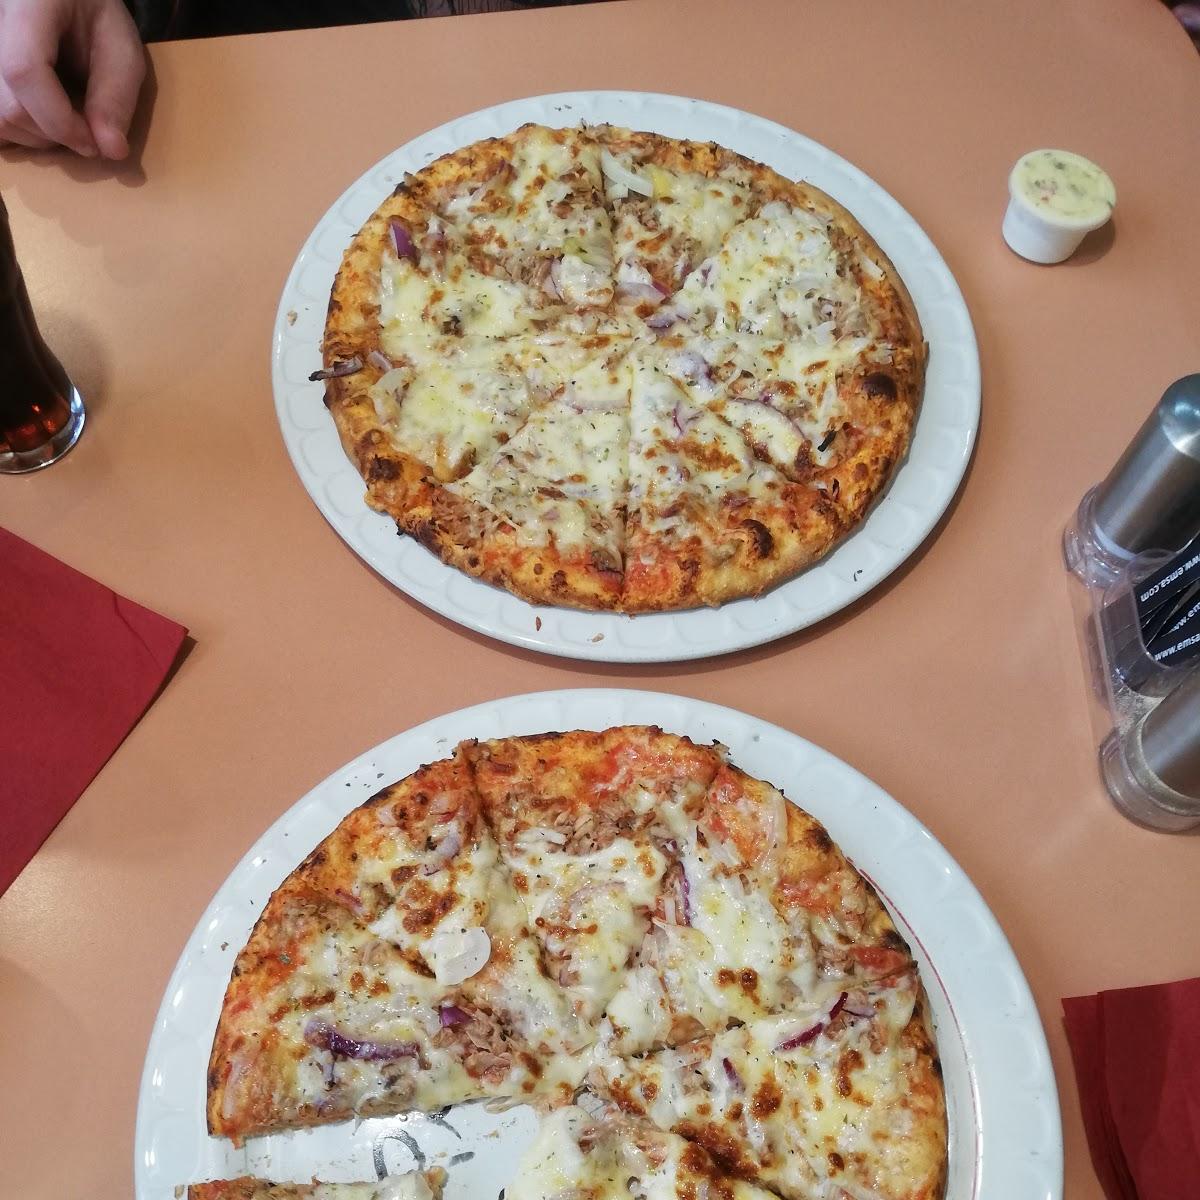 Restaurant "Pizza Hot" in Dortmund